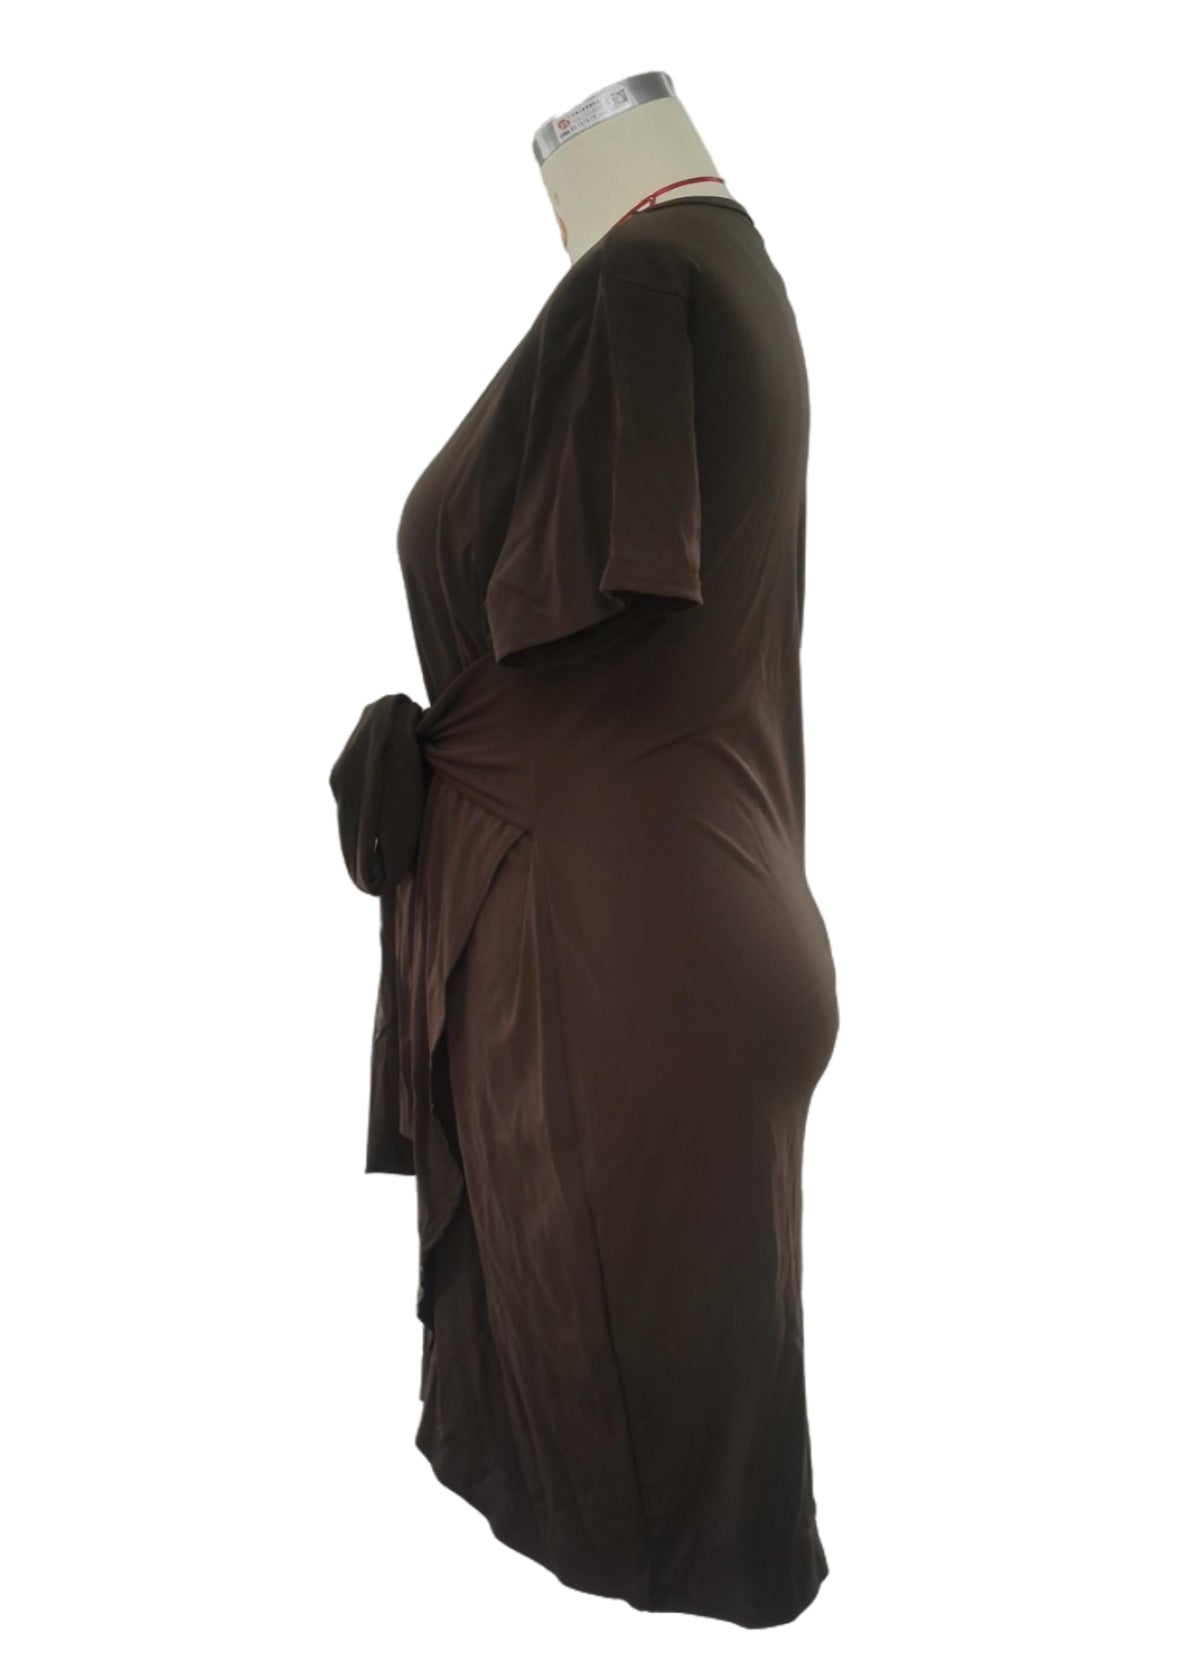 Plus Size Women's Short-Sleeved Asymmetrical Dress